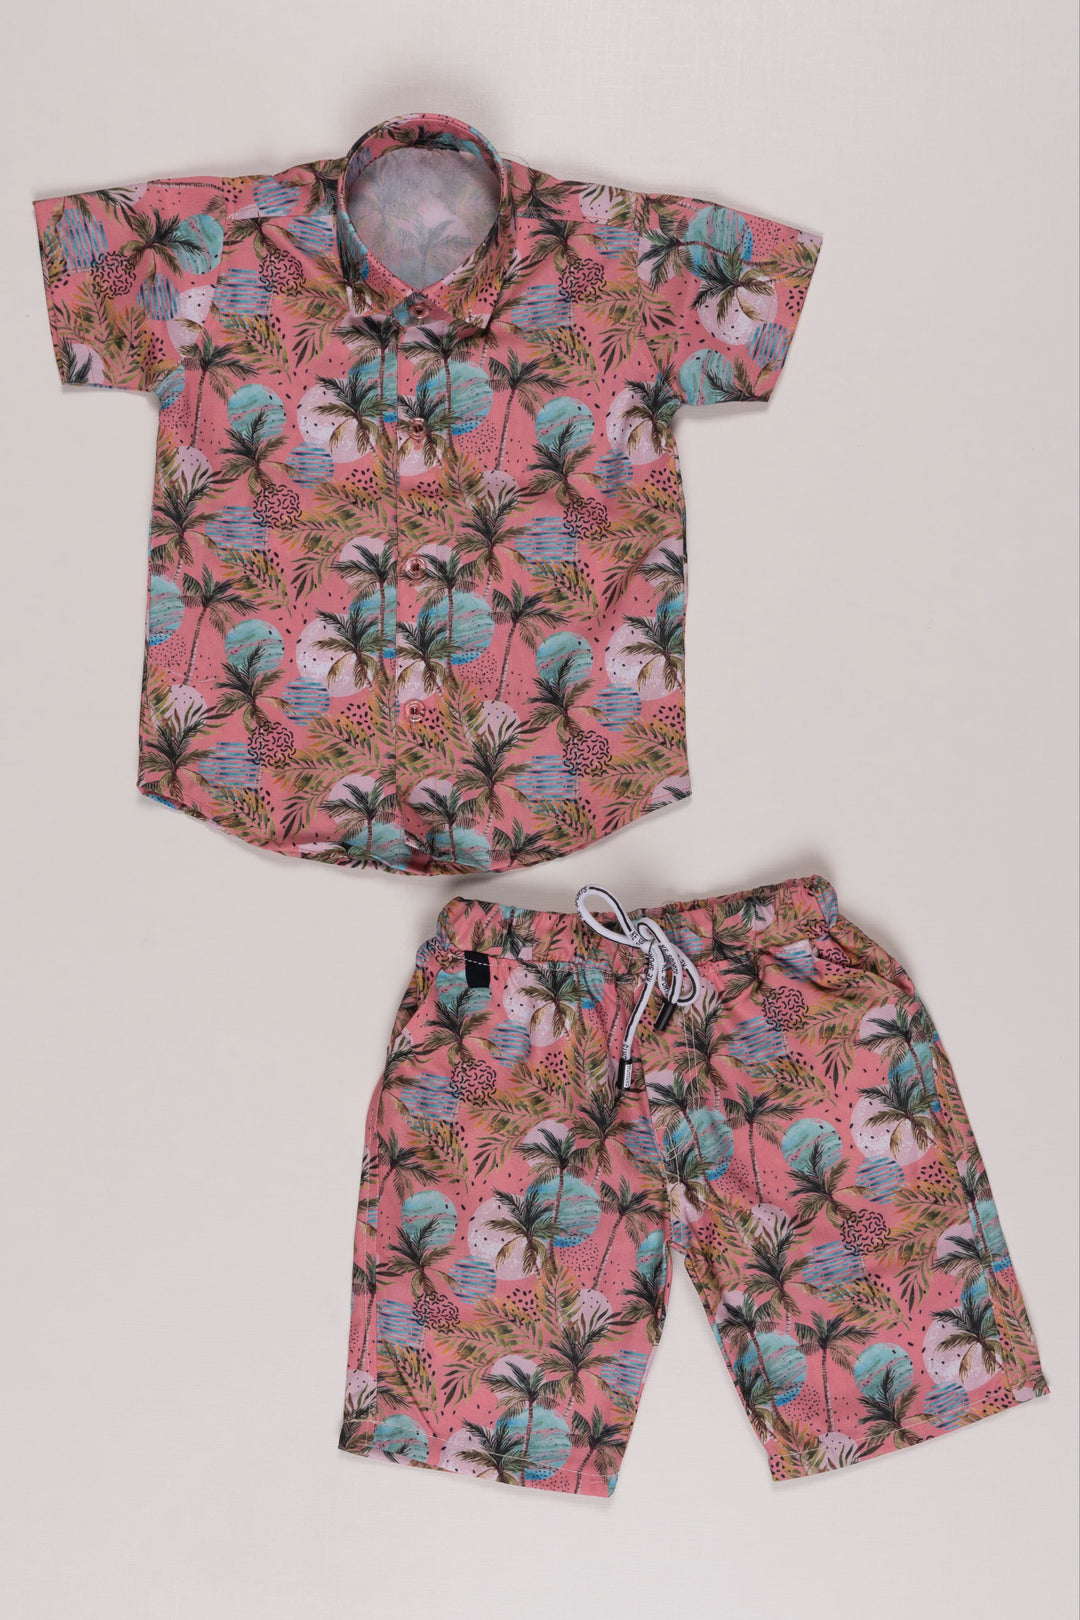 The Nesavu Boys Casual Set Tropical Palm Print Boys Casual Shorts and Shirt Set - Comfortable Two Piece Set Nesavu 16 (1Y) / Pink BCS005B-16 Boys Coral Tropical Shirt & Shorts Set | Casual Summer Wear | The Nesavu